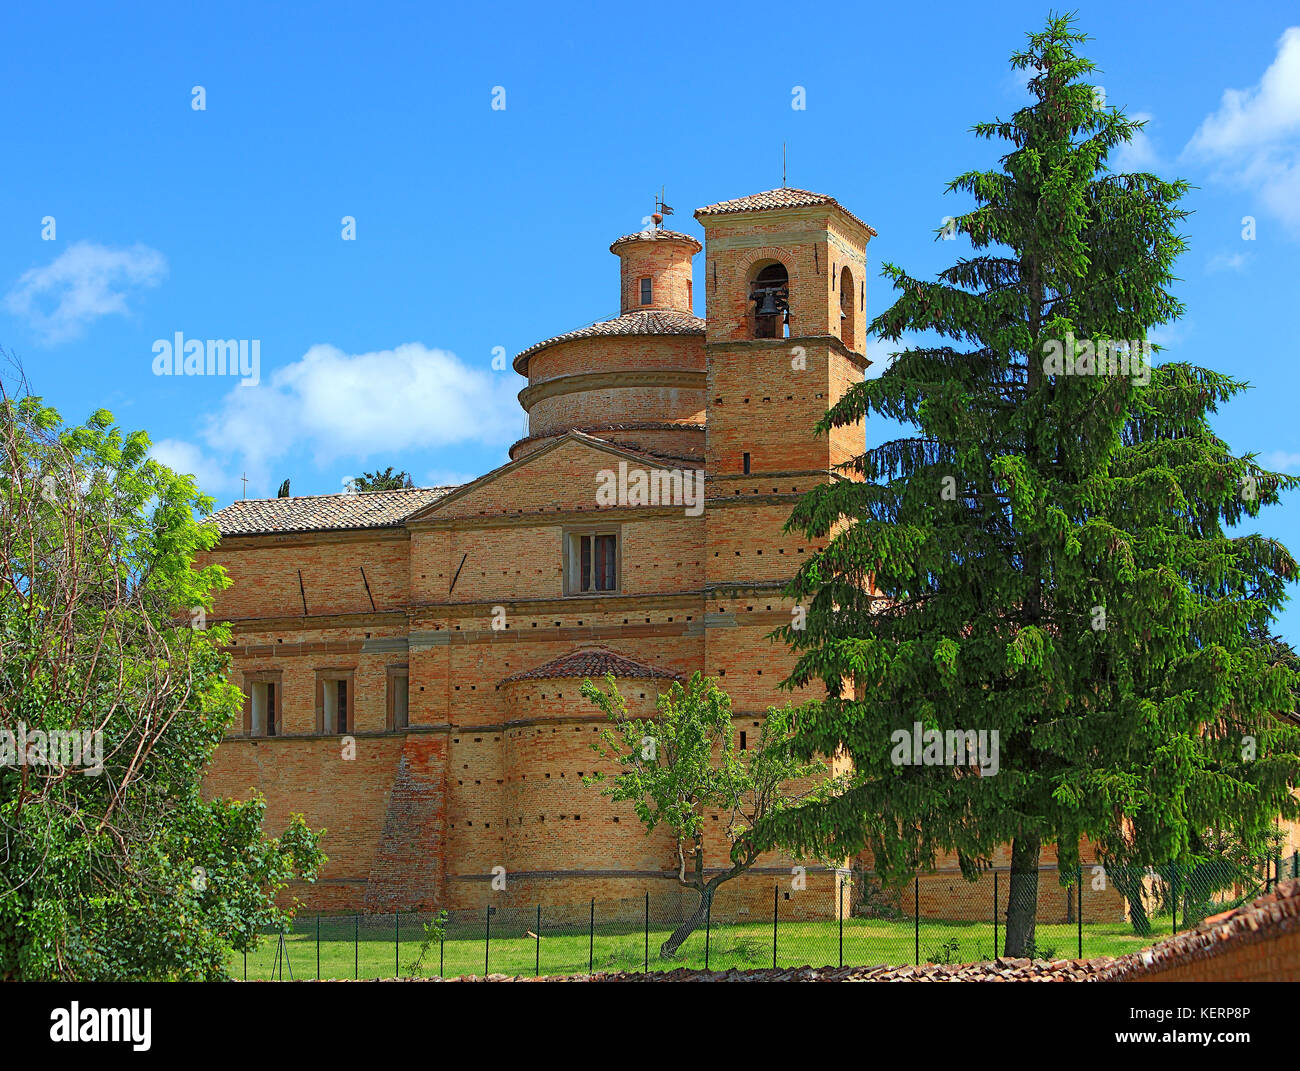 Convent San Bernardino, housing the tombs of the Dukes of Urbino, Urbino, Marche, Italy Stock Photo